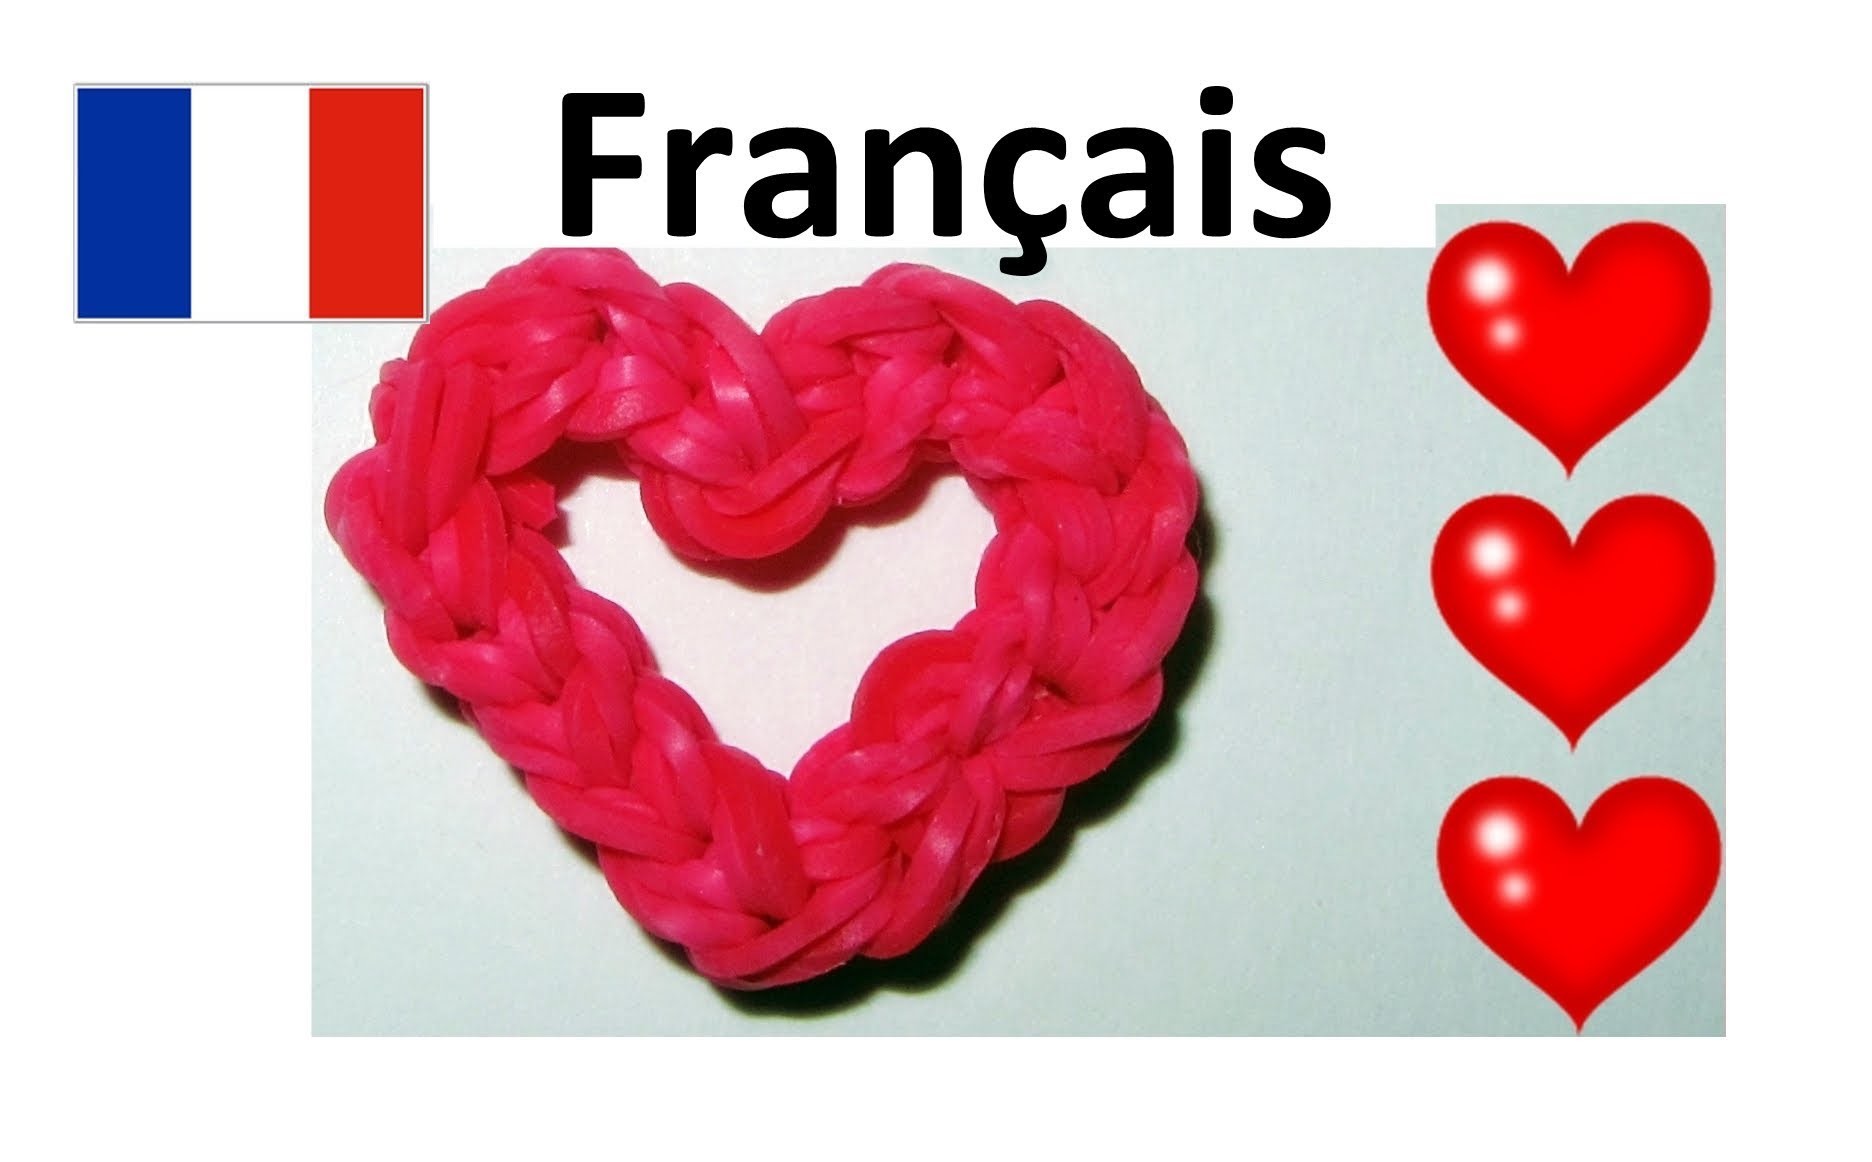 Rainbow Loom Français || Coeur élastiques | loom bands heart